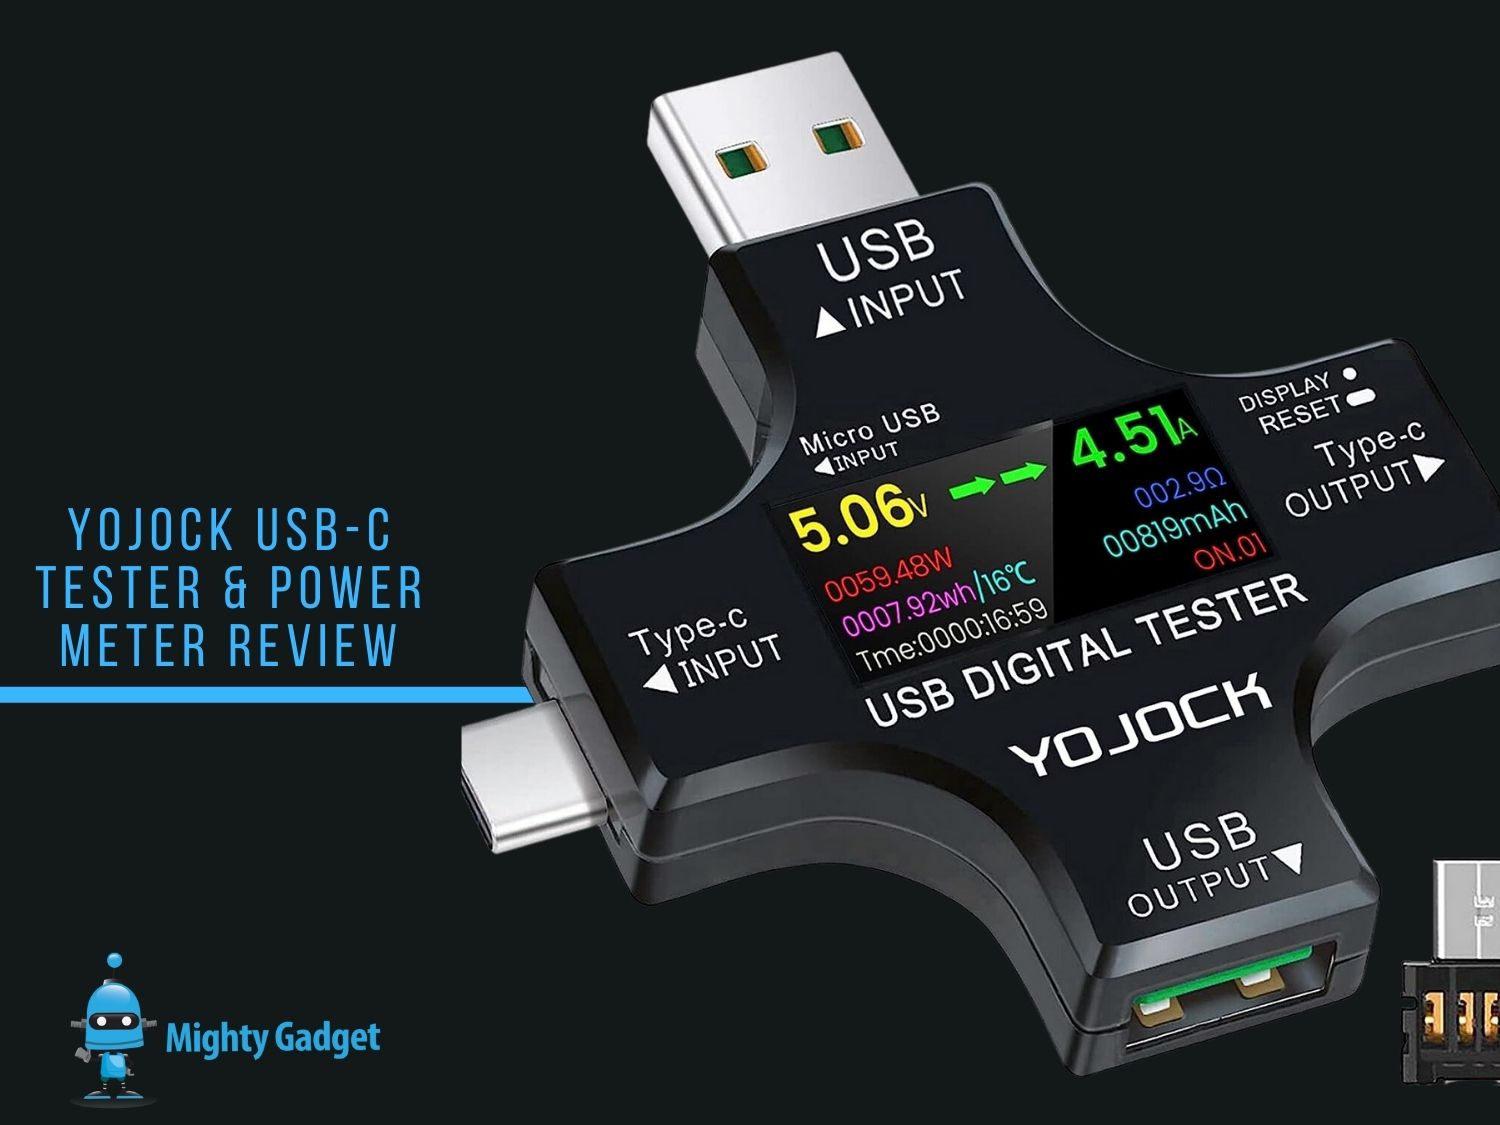 YOJOCK USB C Tester Power Meter Mighty Gadget Review